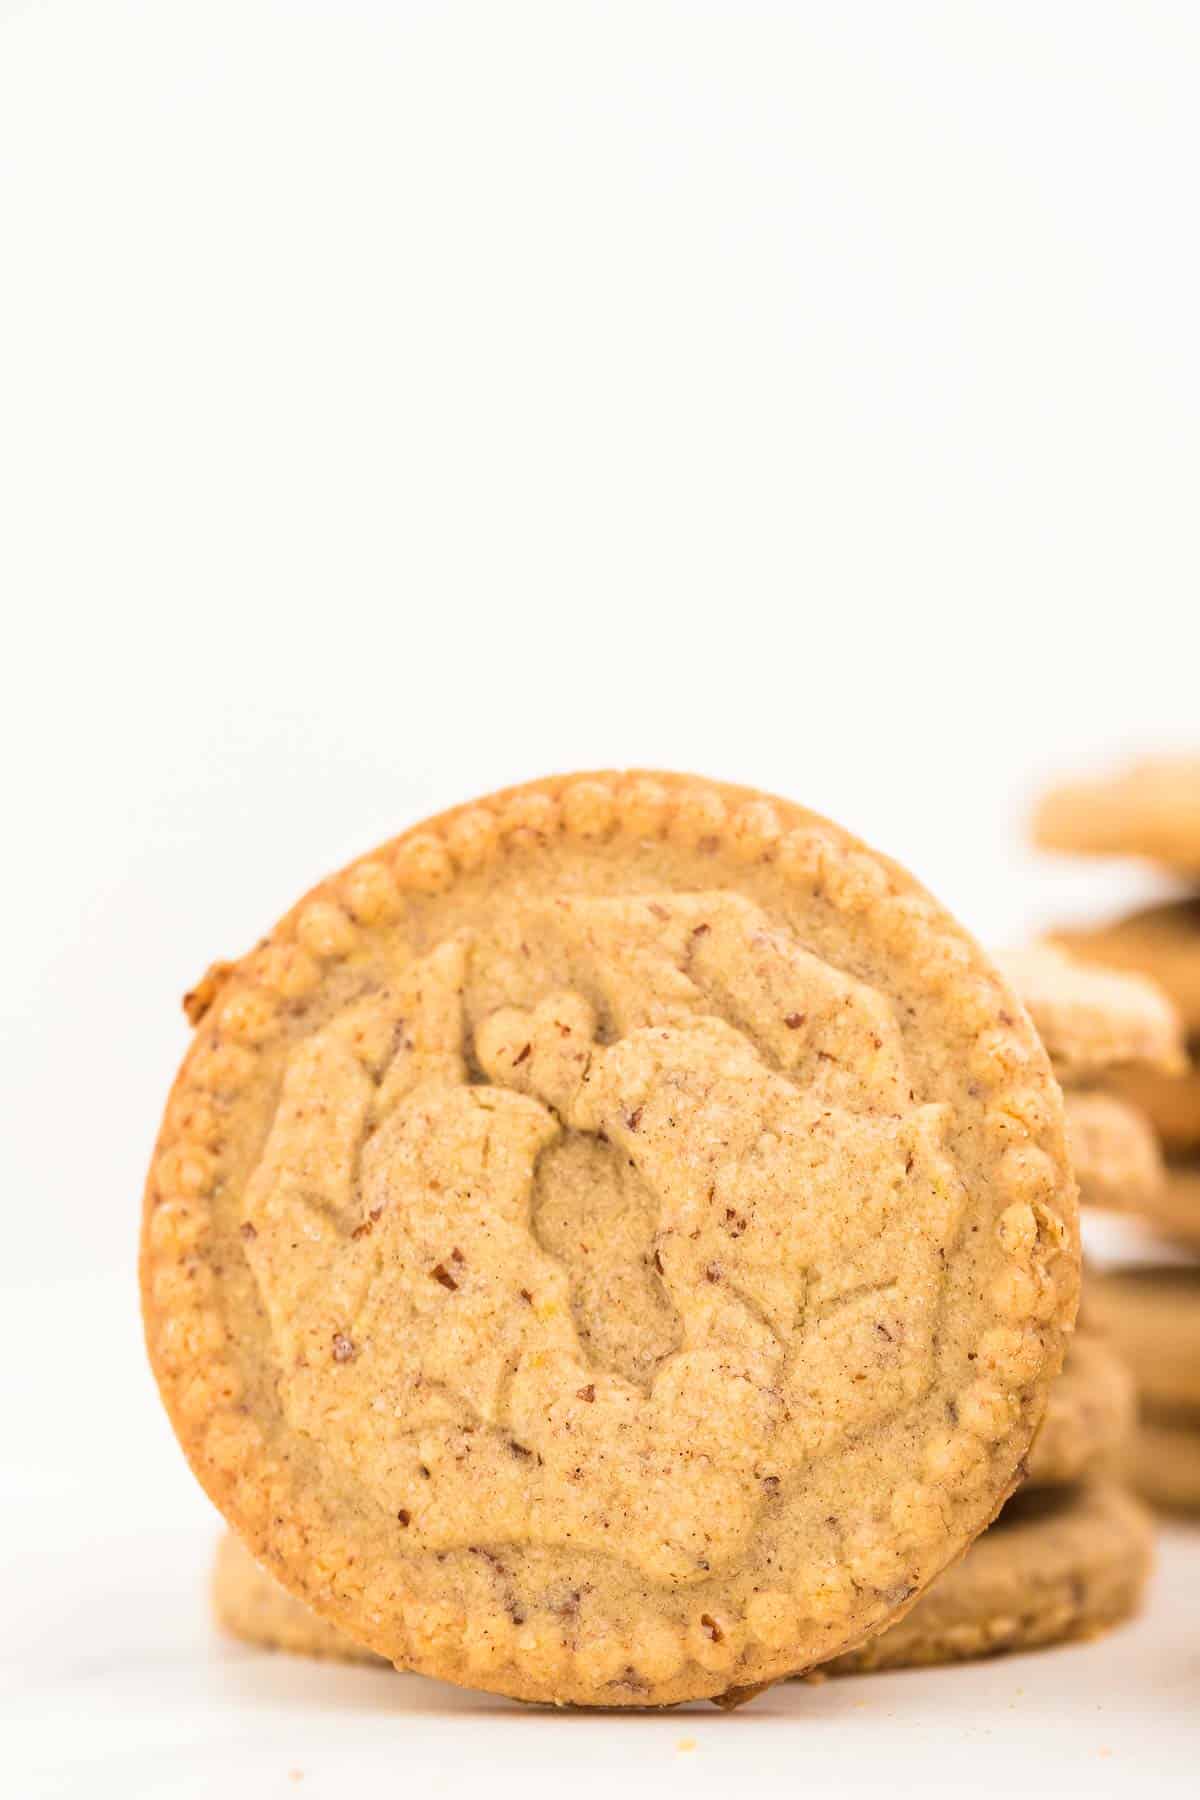 A closeup of a round, stamped Spekulatius Cookie (German Spiced Cookie).